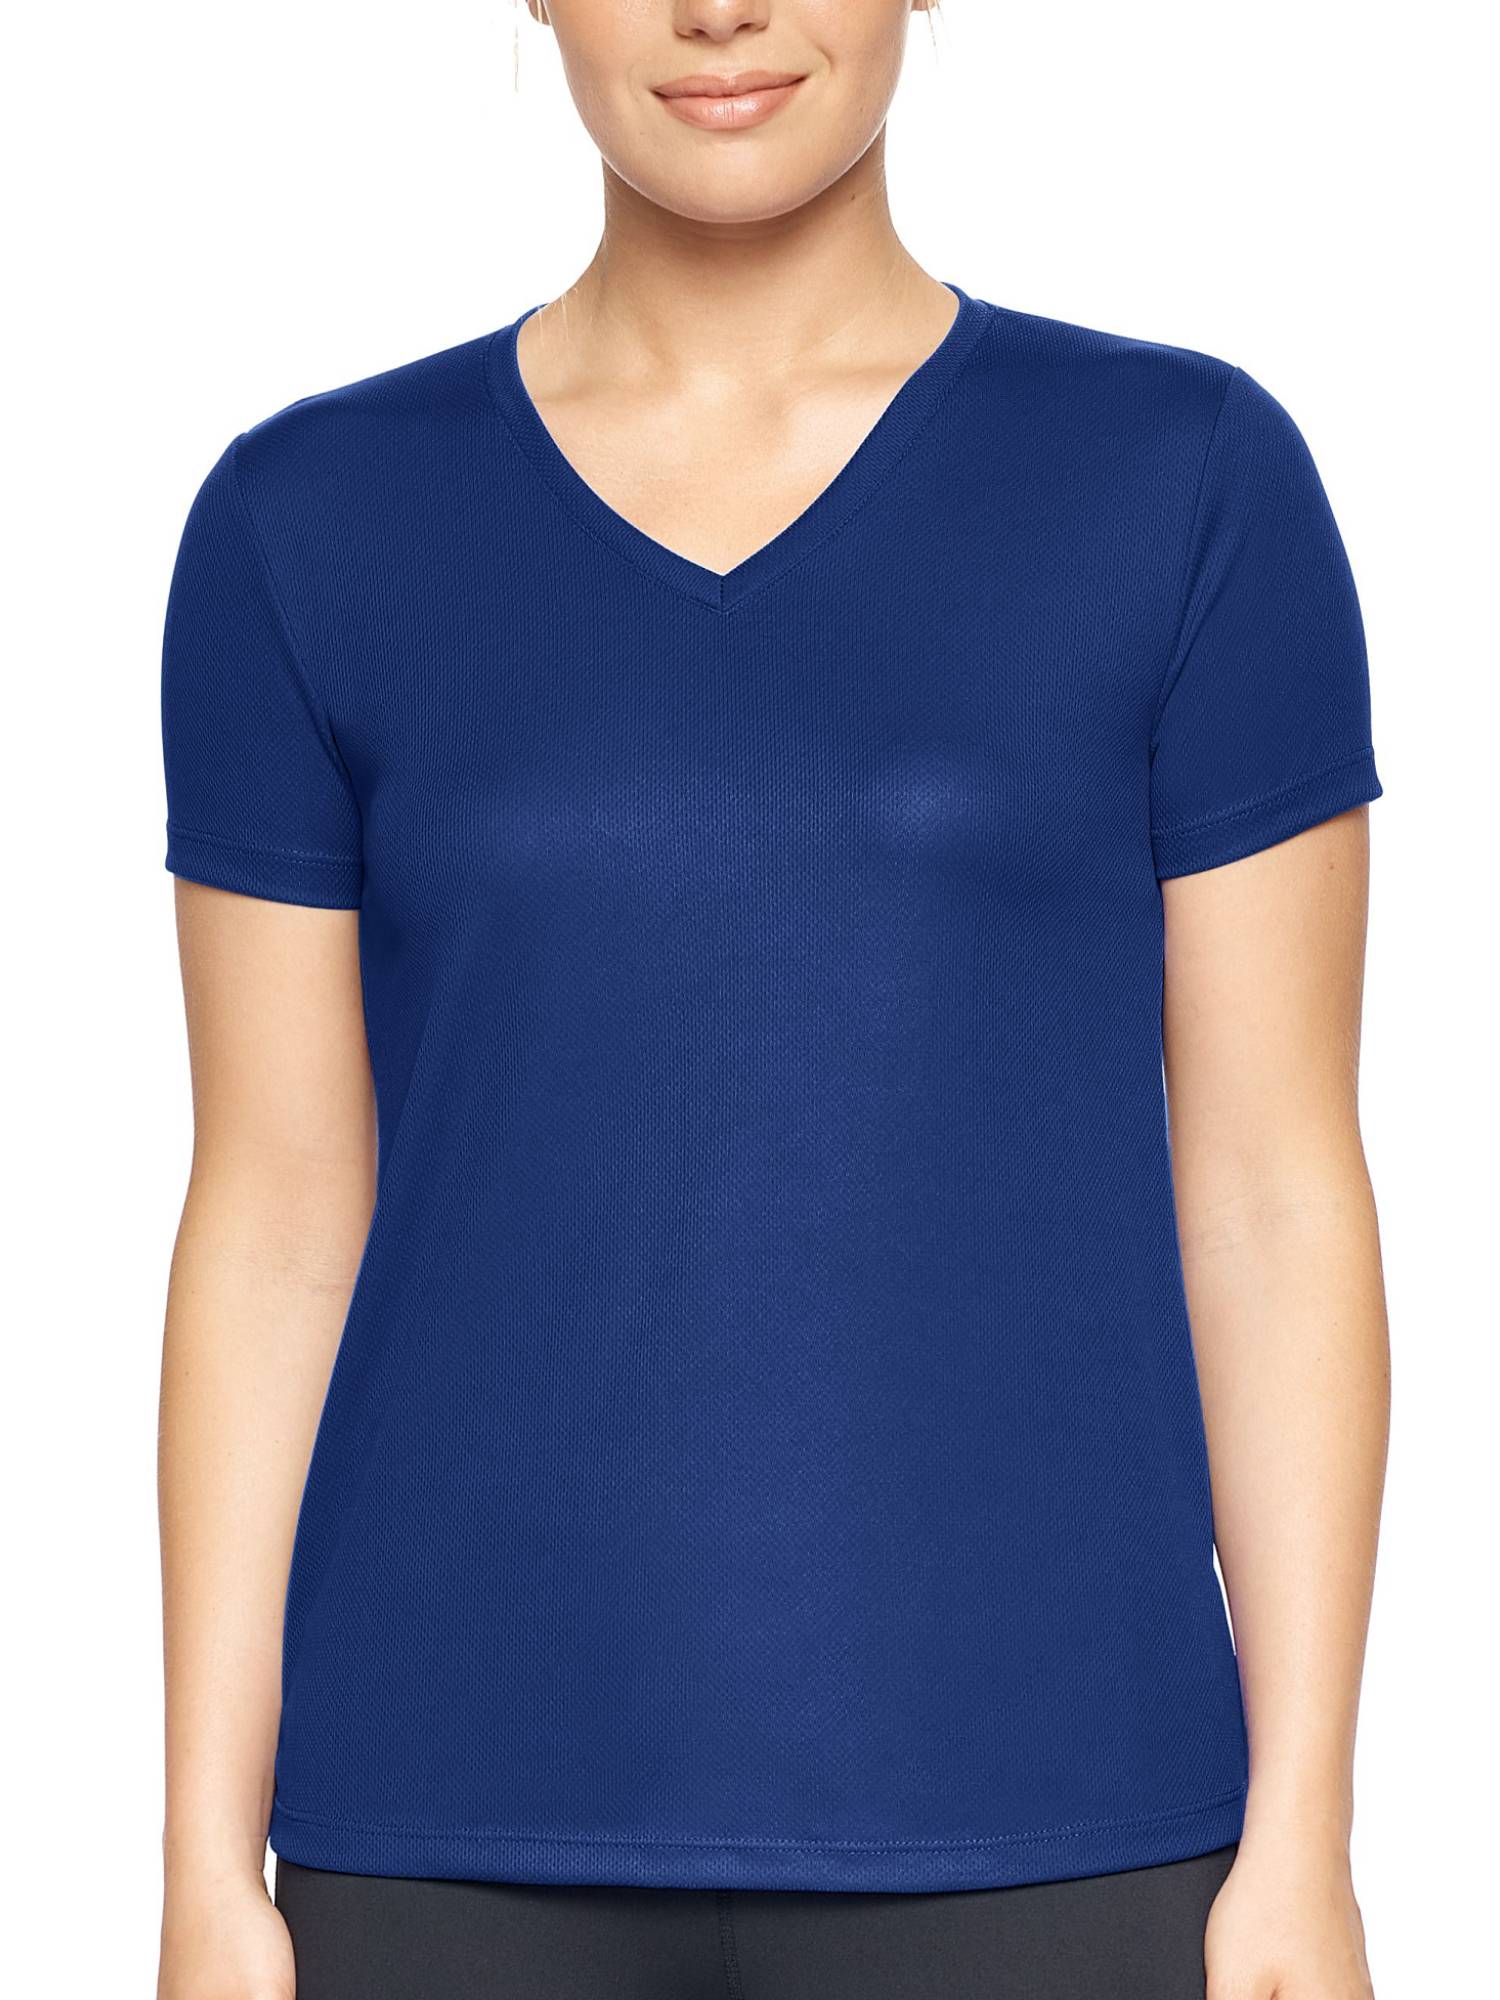 Women's Oxymesh V-Neck Tech T-Shirt